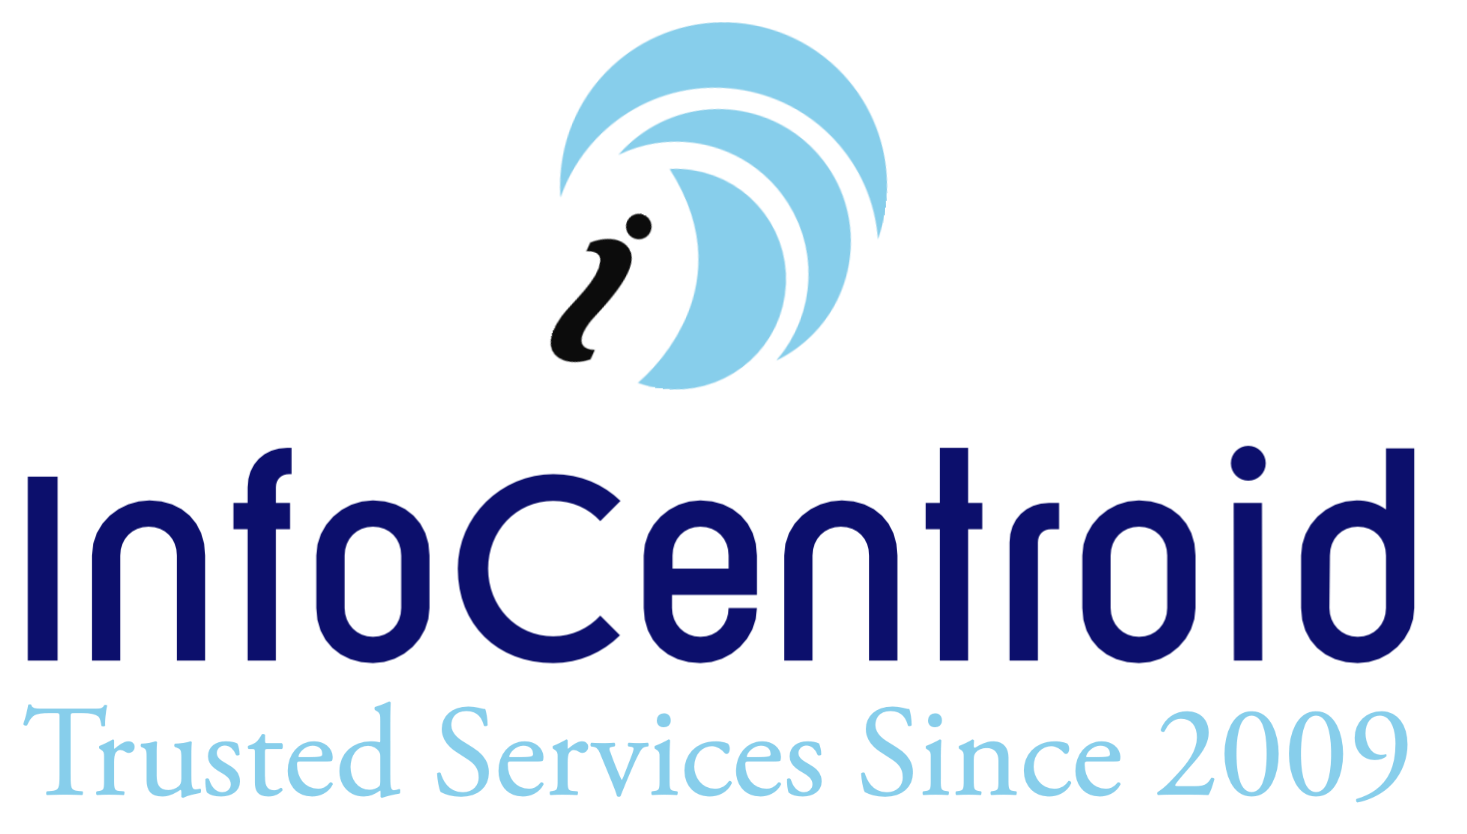 InfoCentroid | Mobile App Development | Website Design | SEO